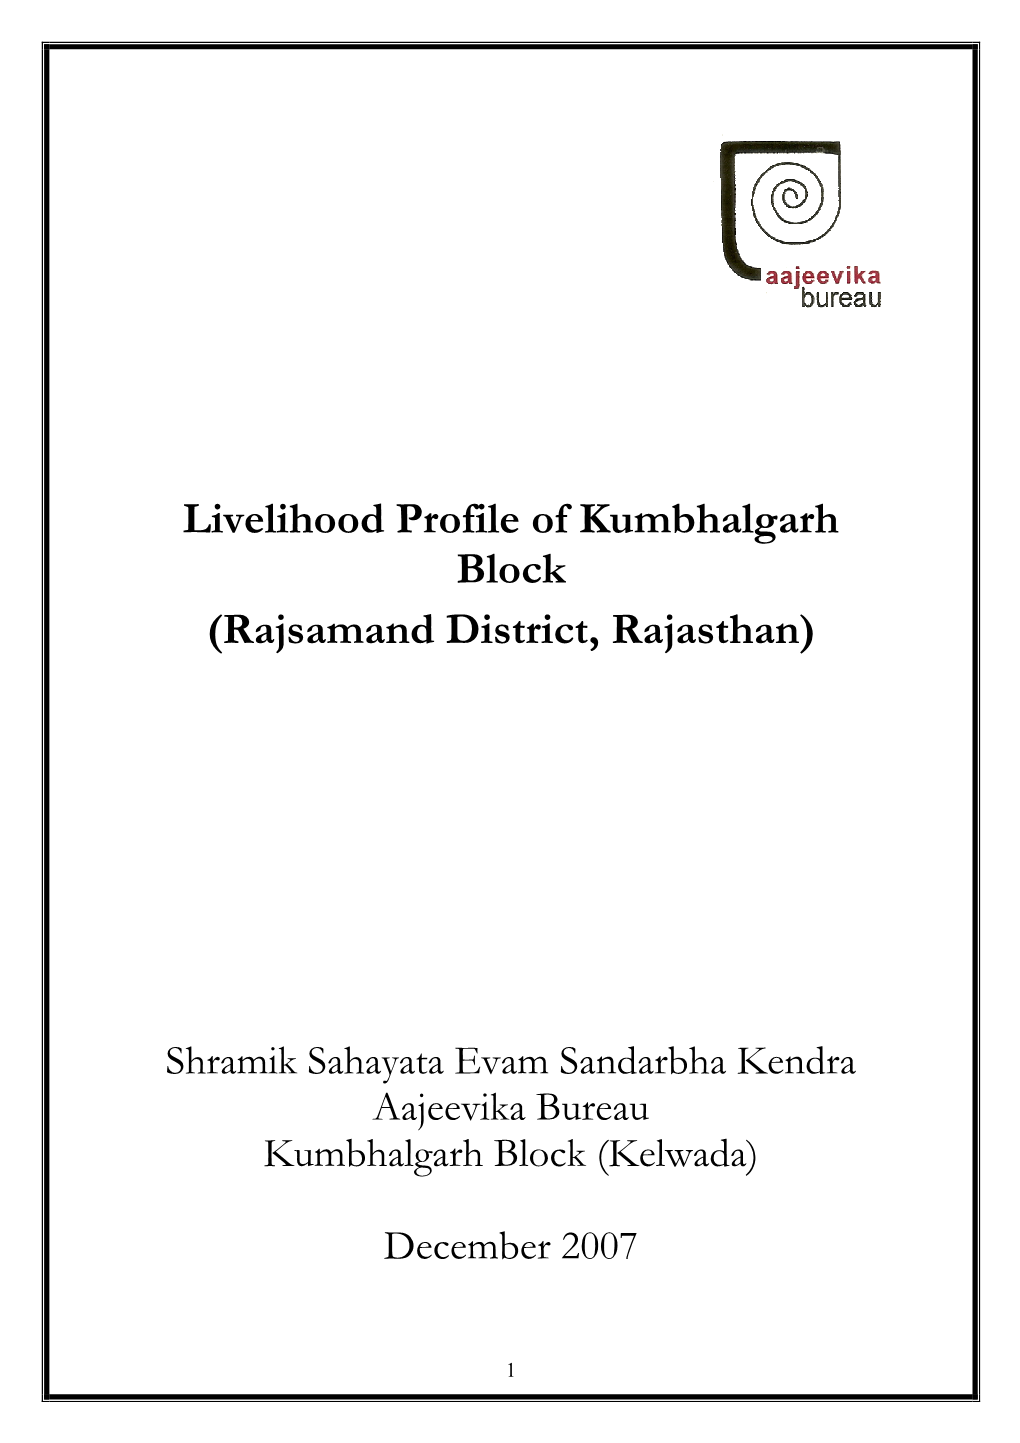 Livelihood Profile of Kumbhalgarh Block, District Rajsamand, Rajasthan